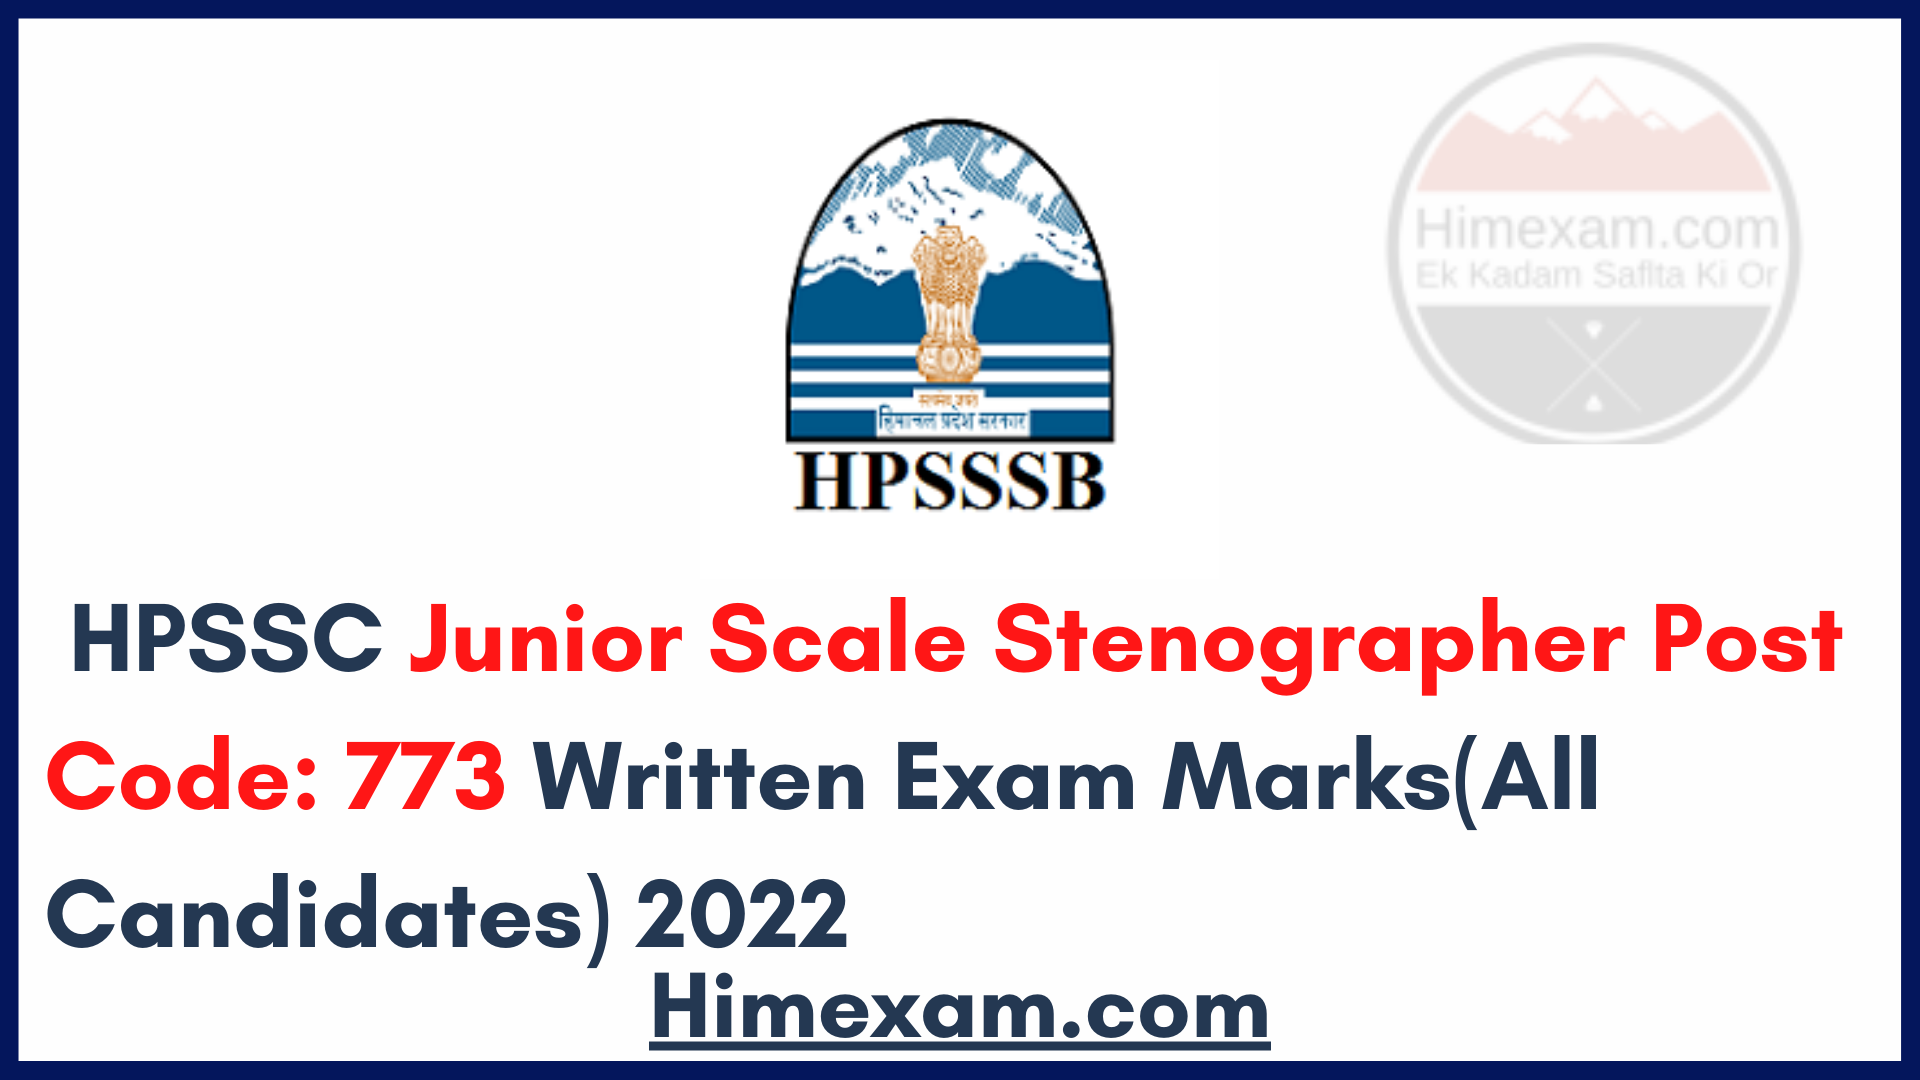 HPSSC Junior Scale Stenographer Post Code: 773 Written Exam Marks(All Candidates) 2022